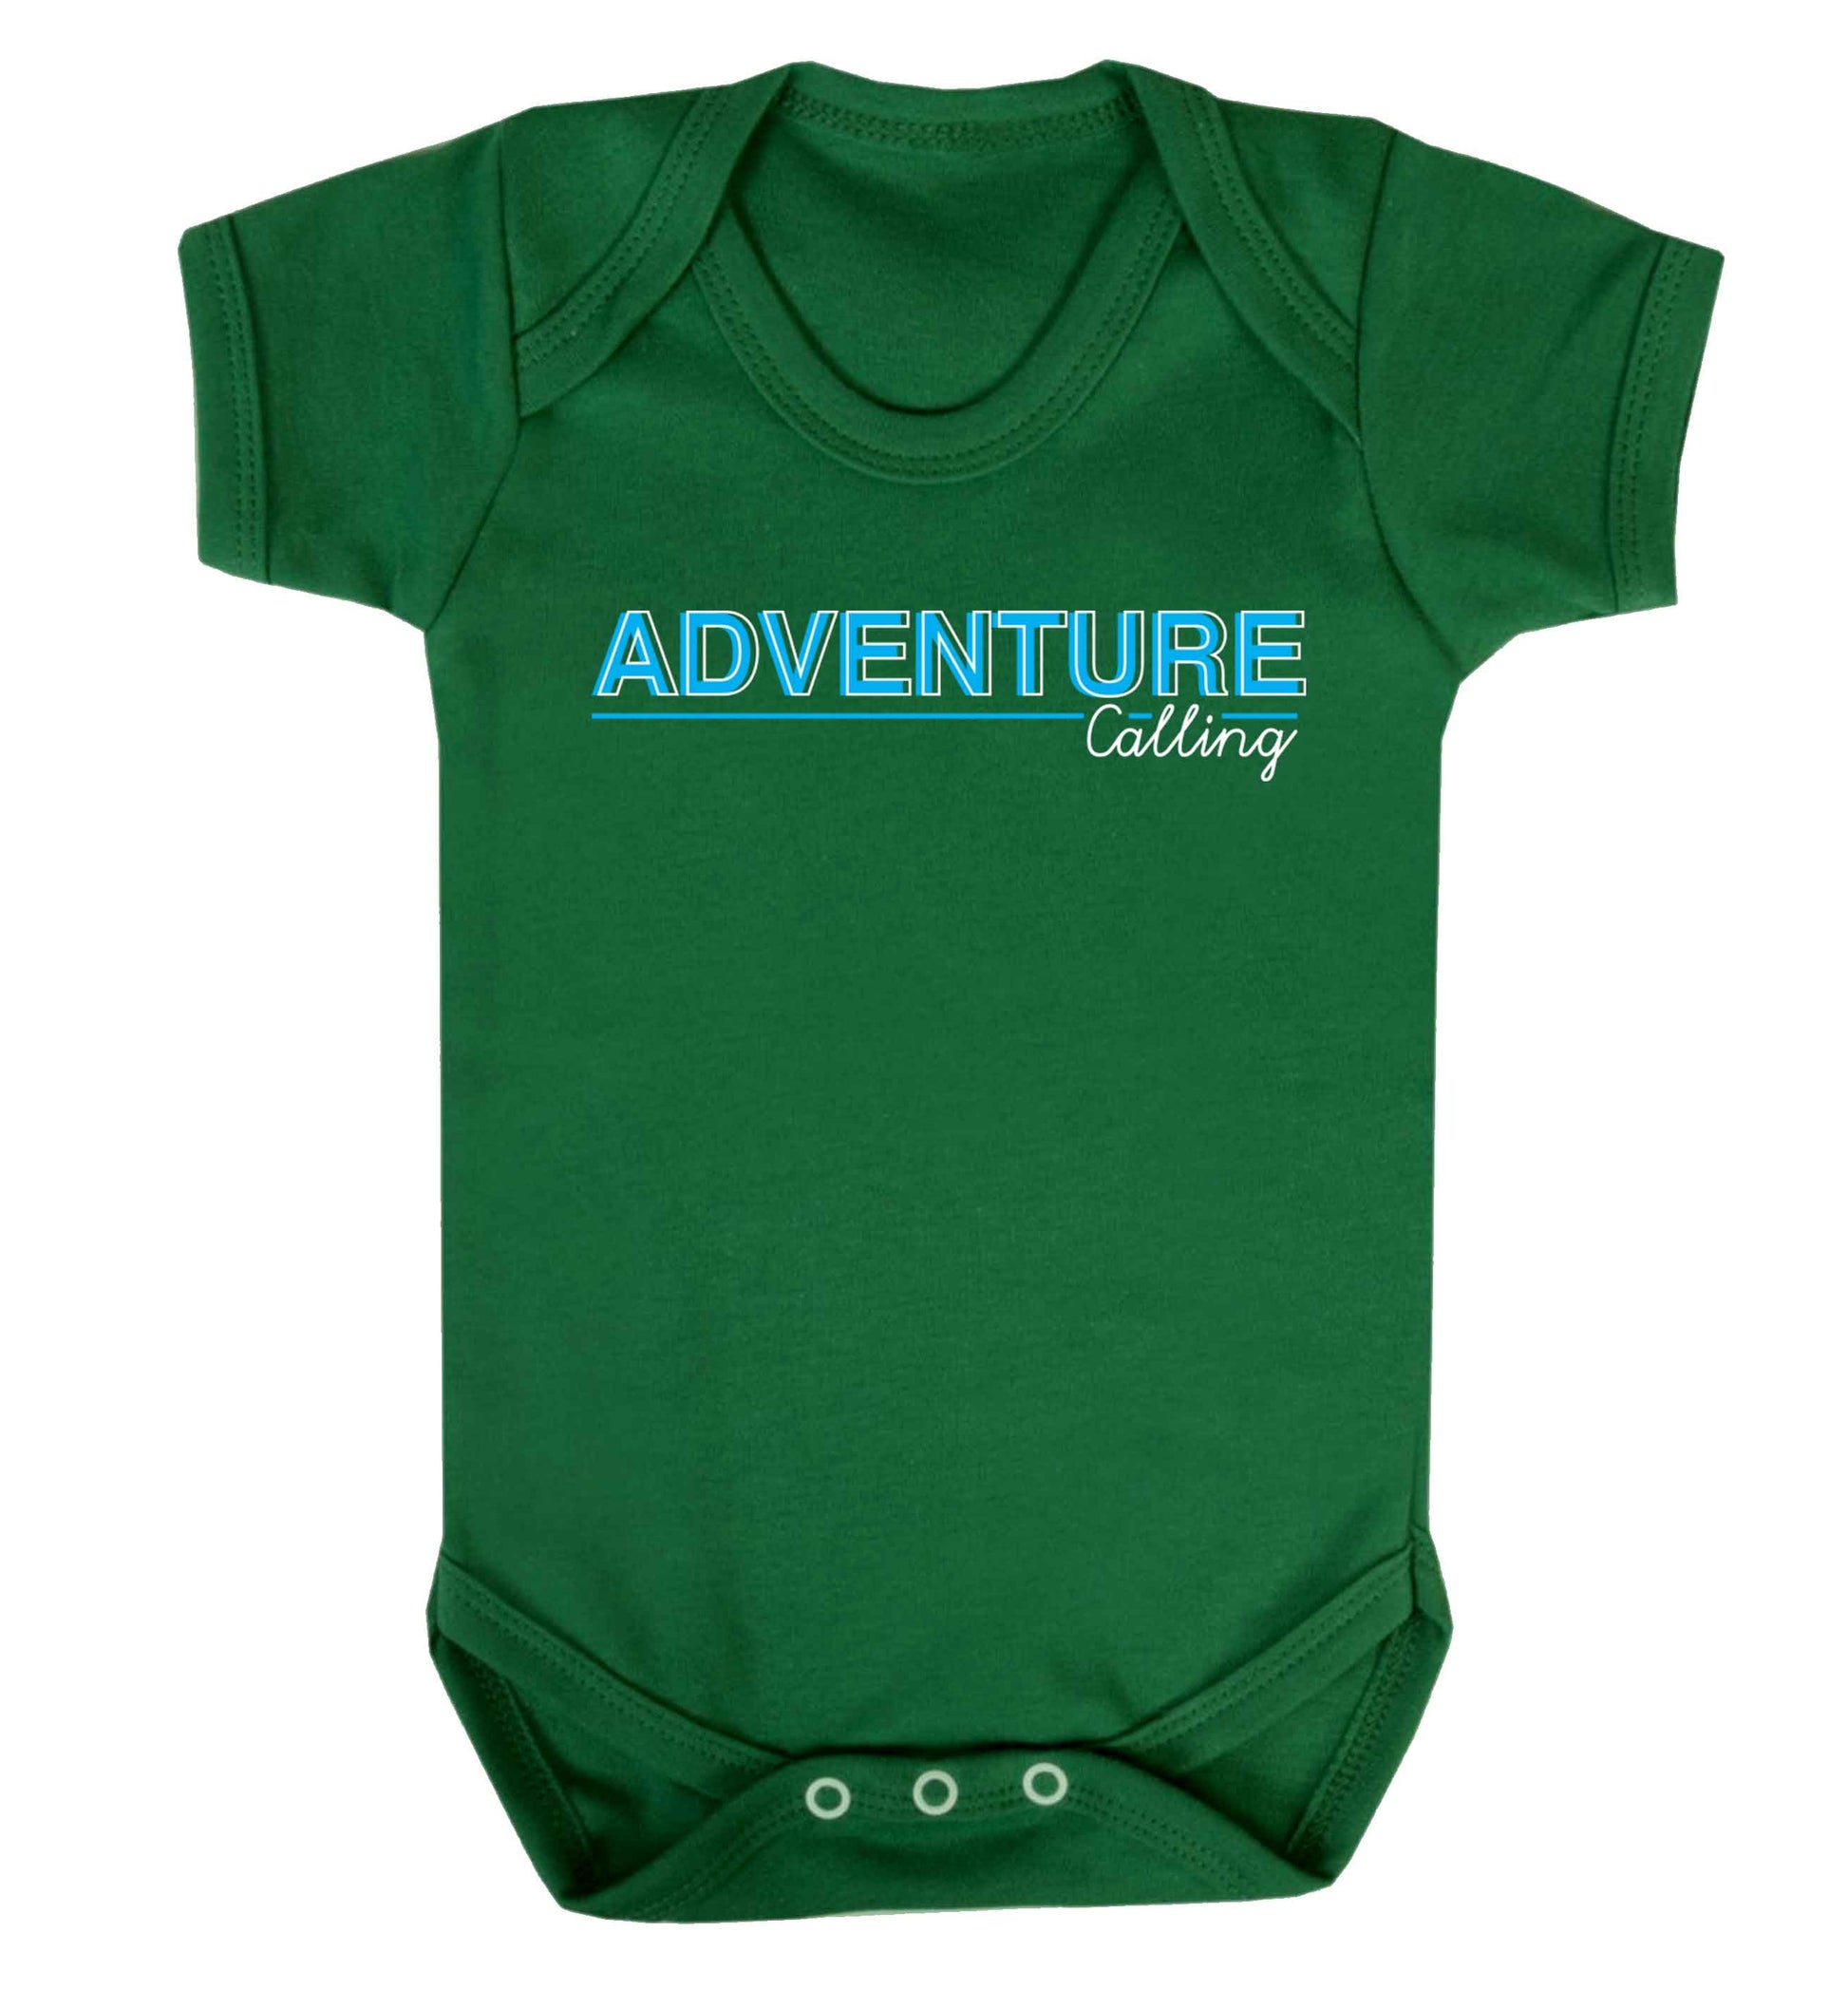 Adventure calling Baby Vest green 18-24 months